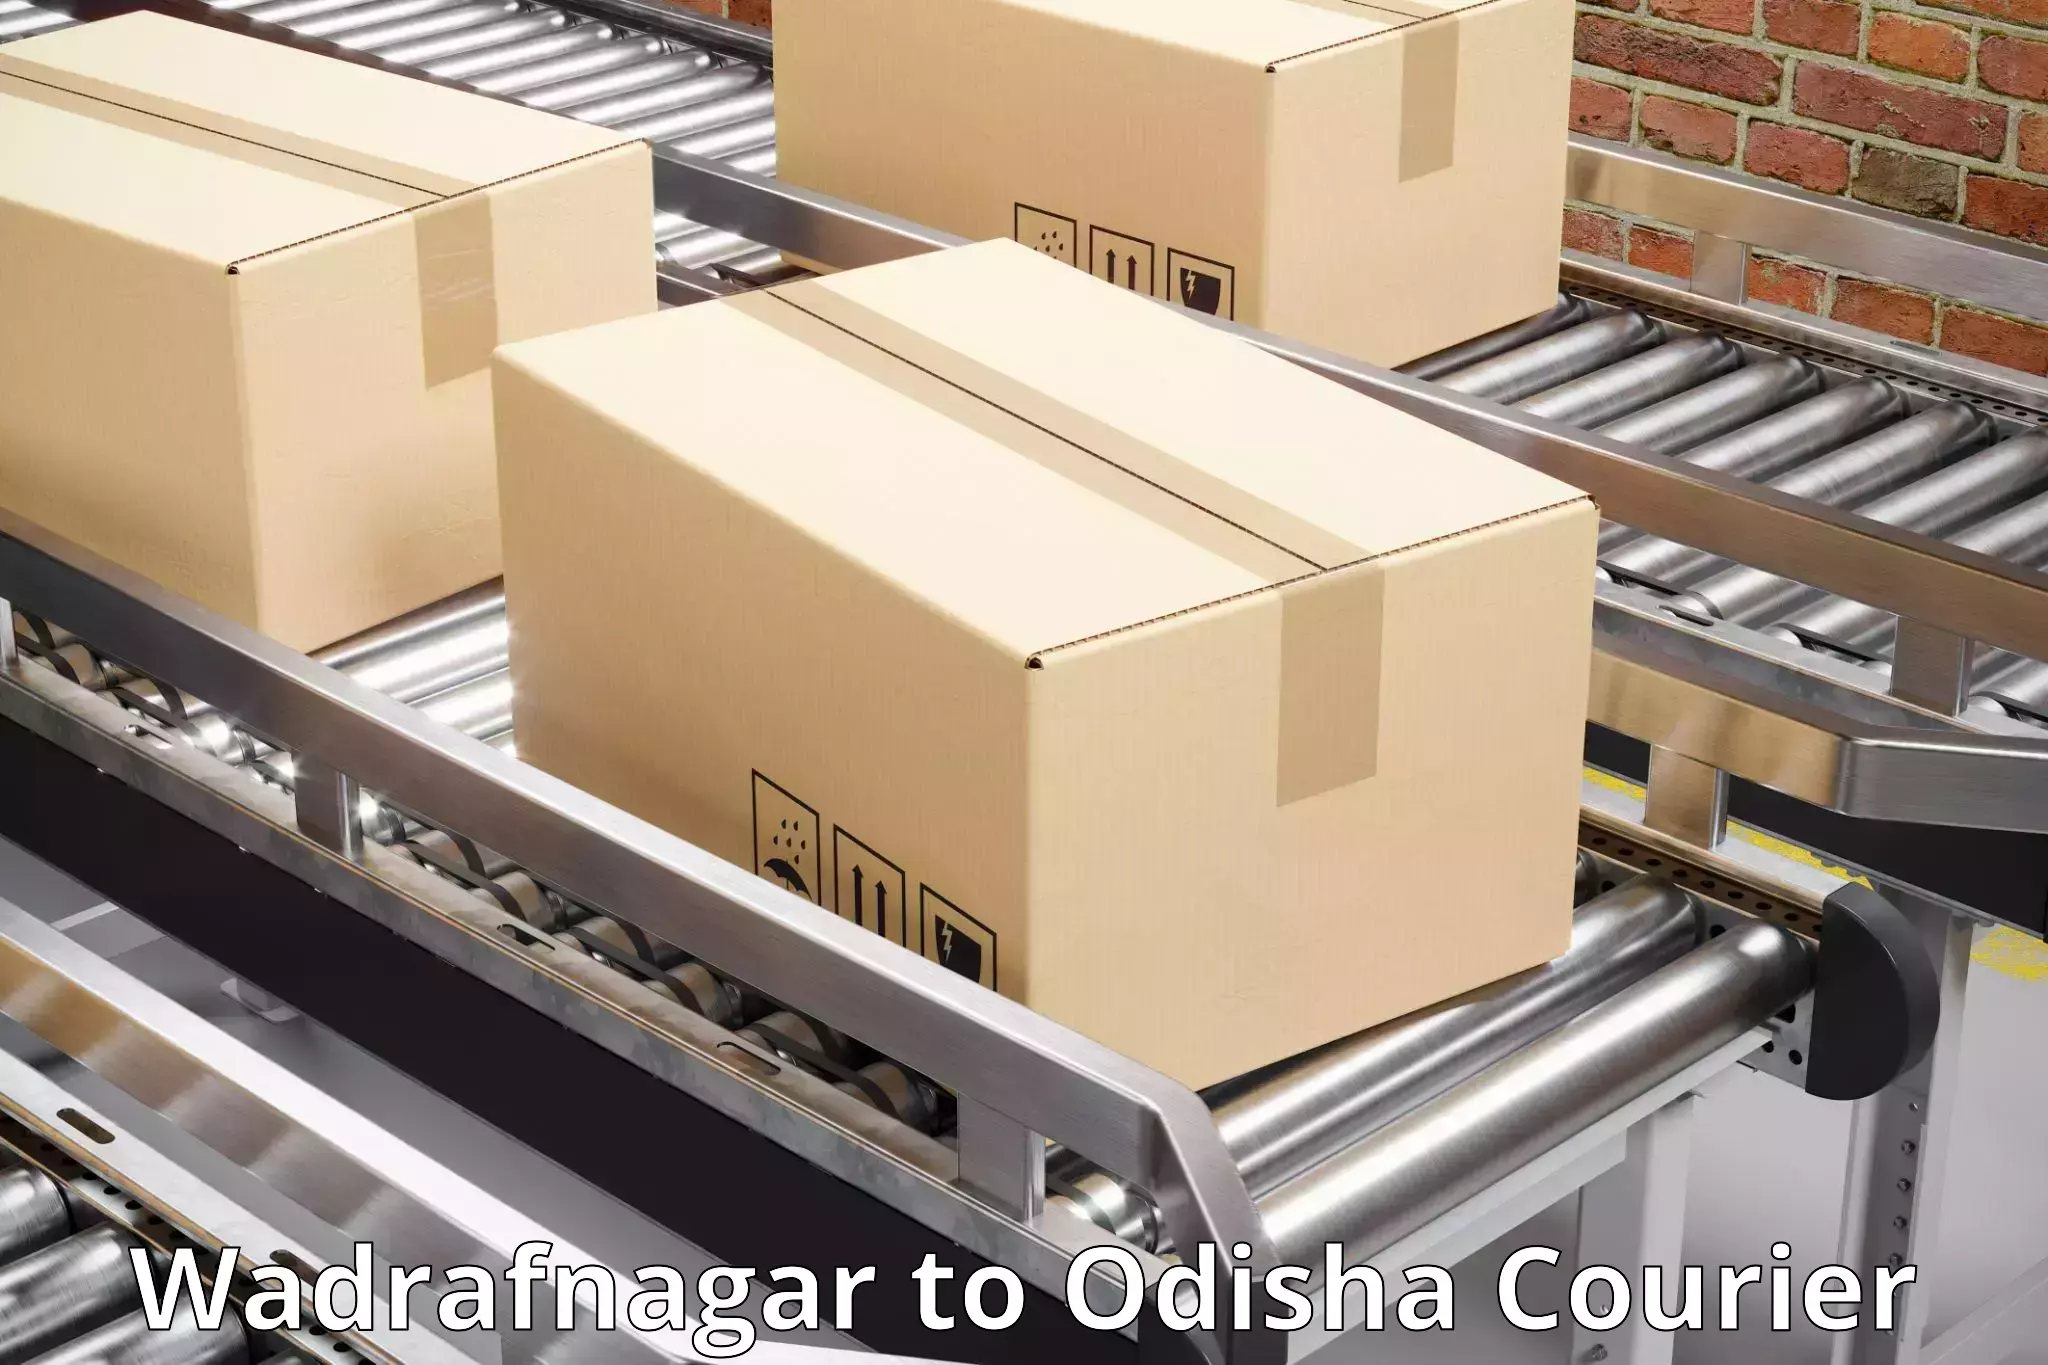 Trackable shipping service Wadrafnagar to Loisingha